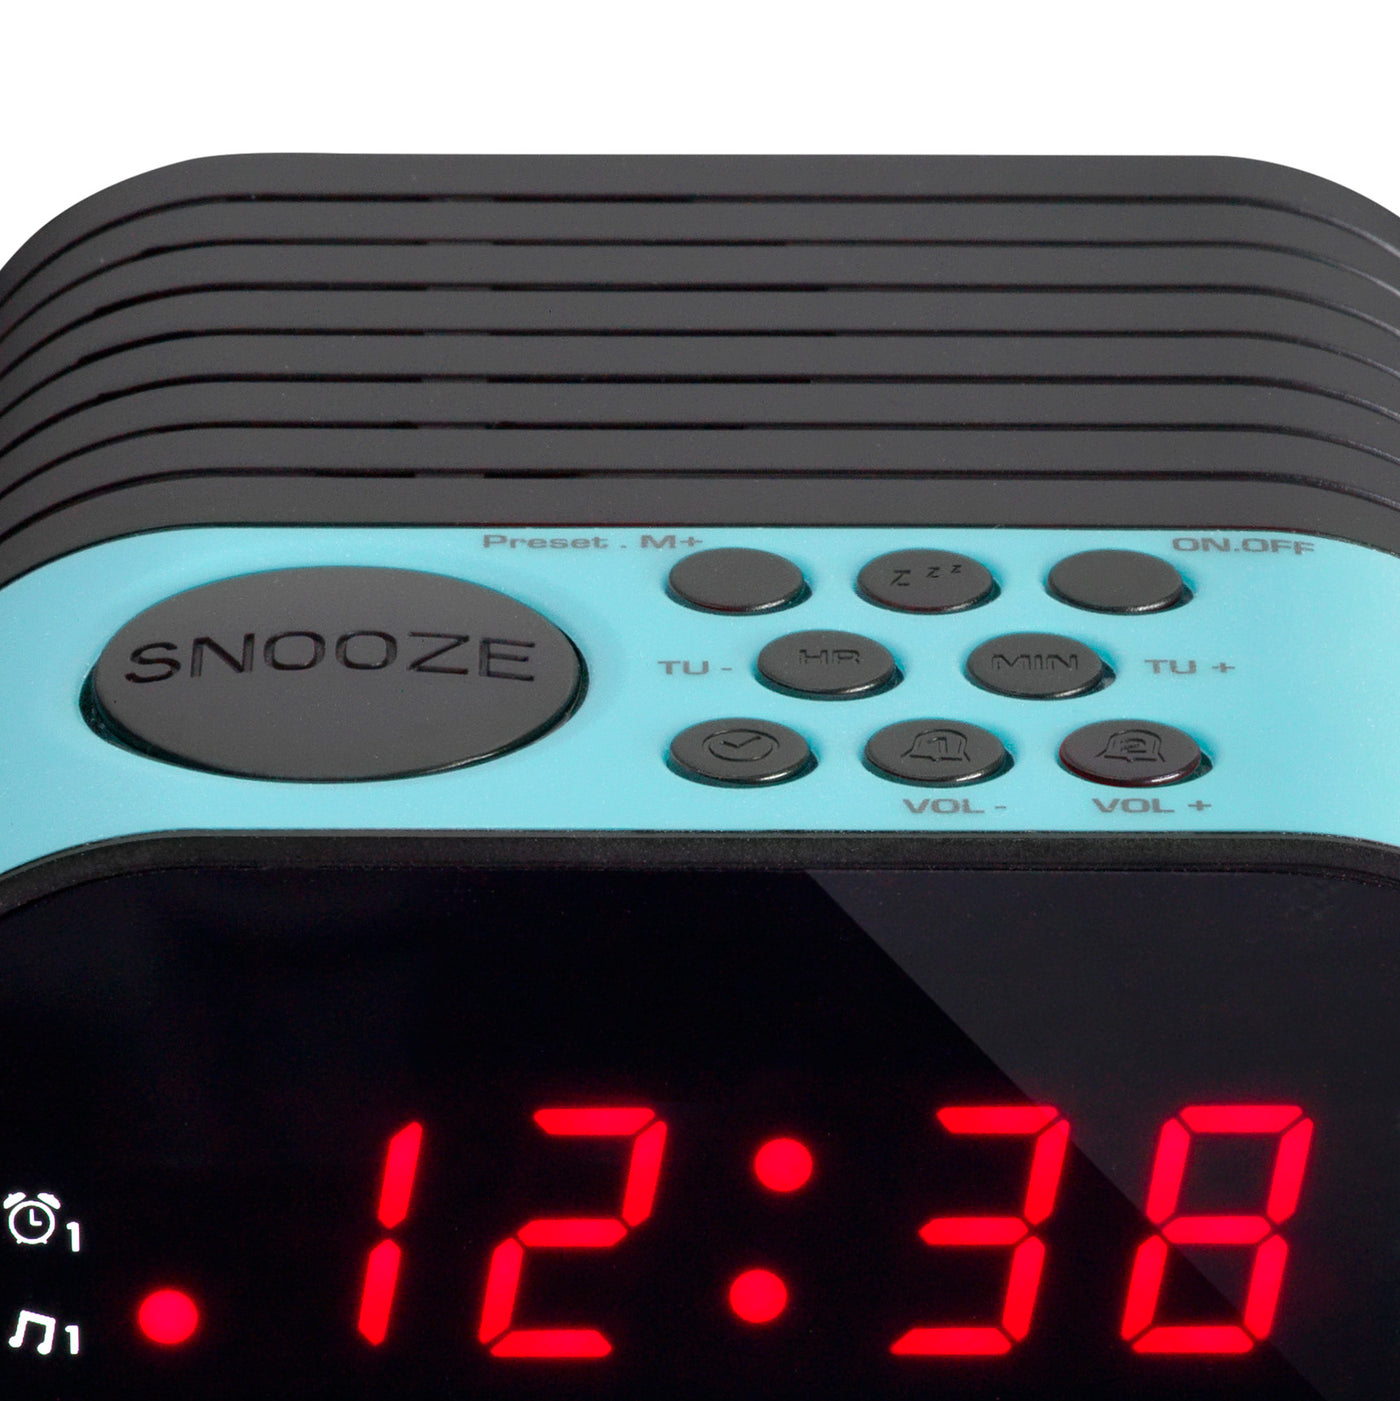 LENCO CR-07 Blue - FM Alarm Clock Radio with with Sleep timer and double alarm function - Blue